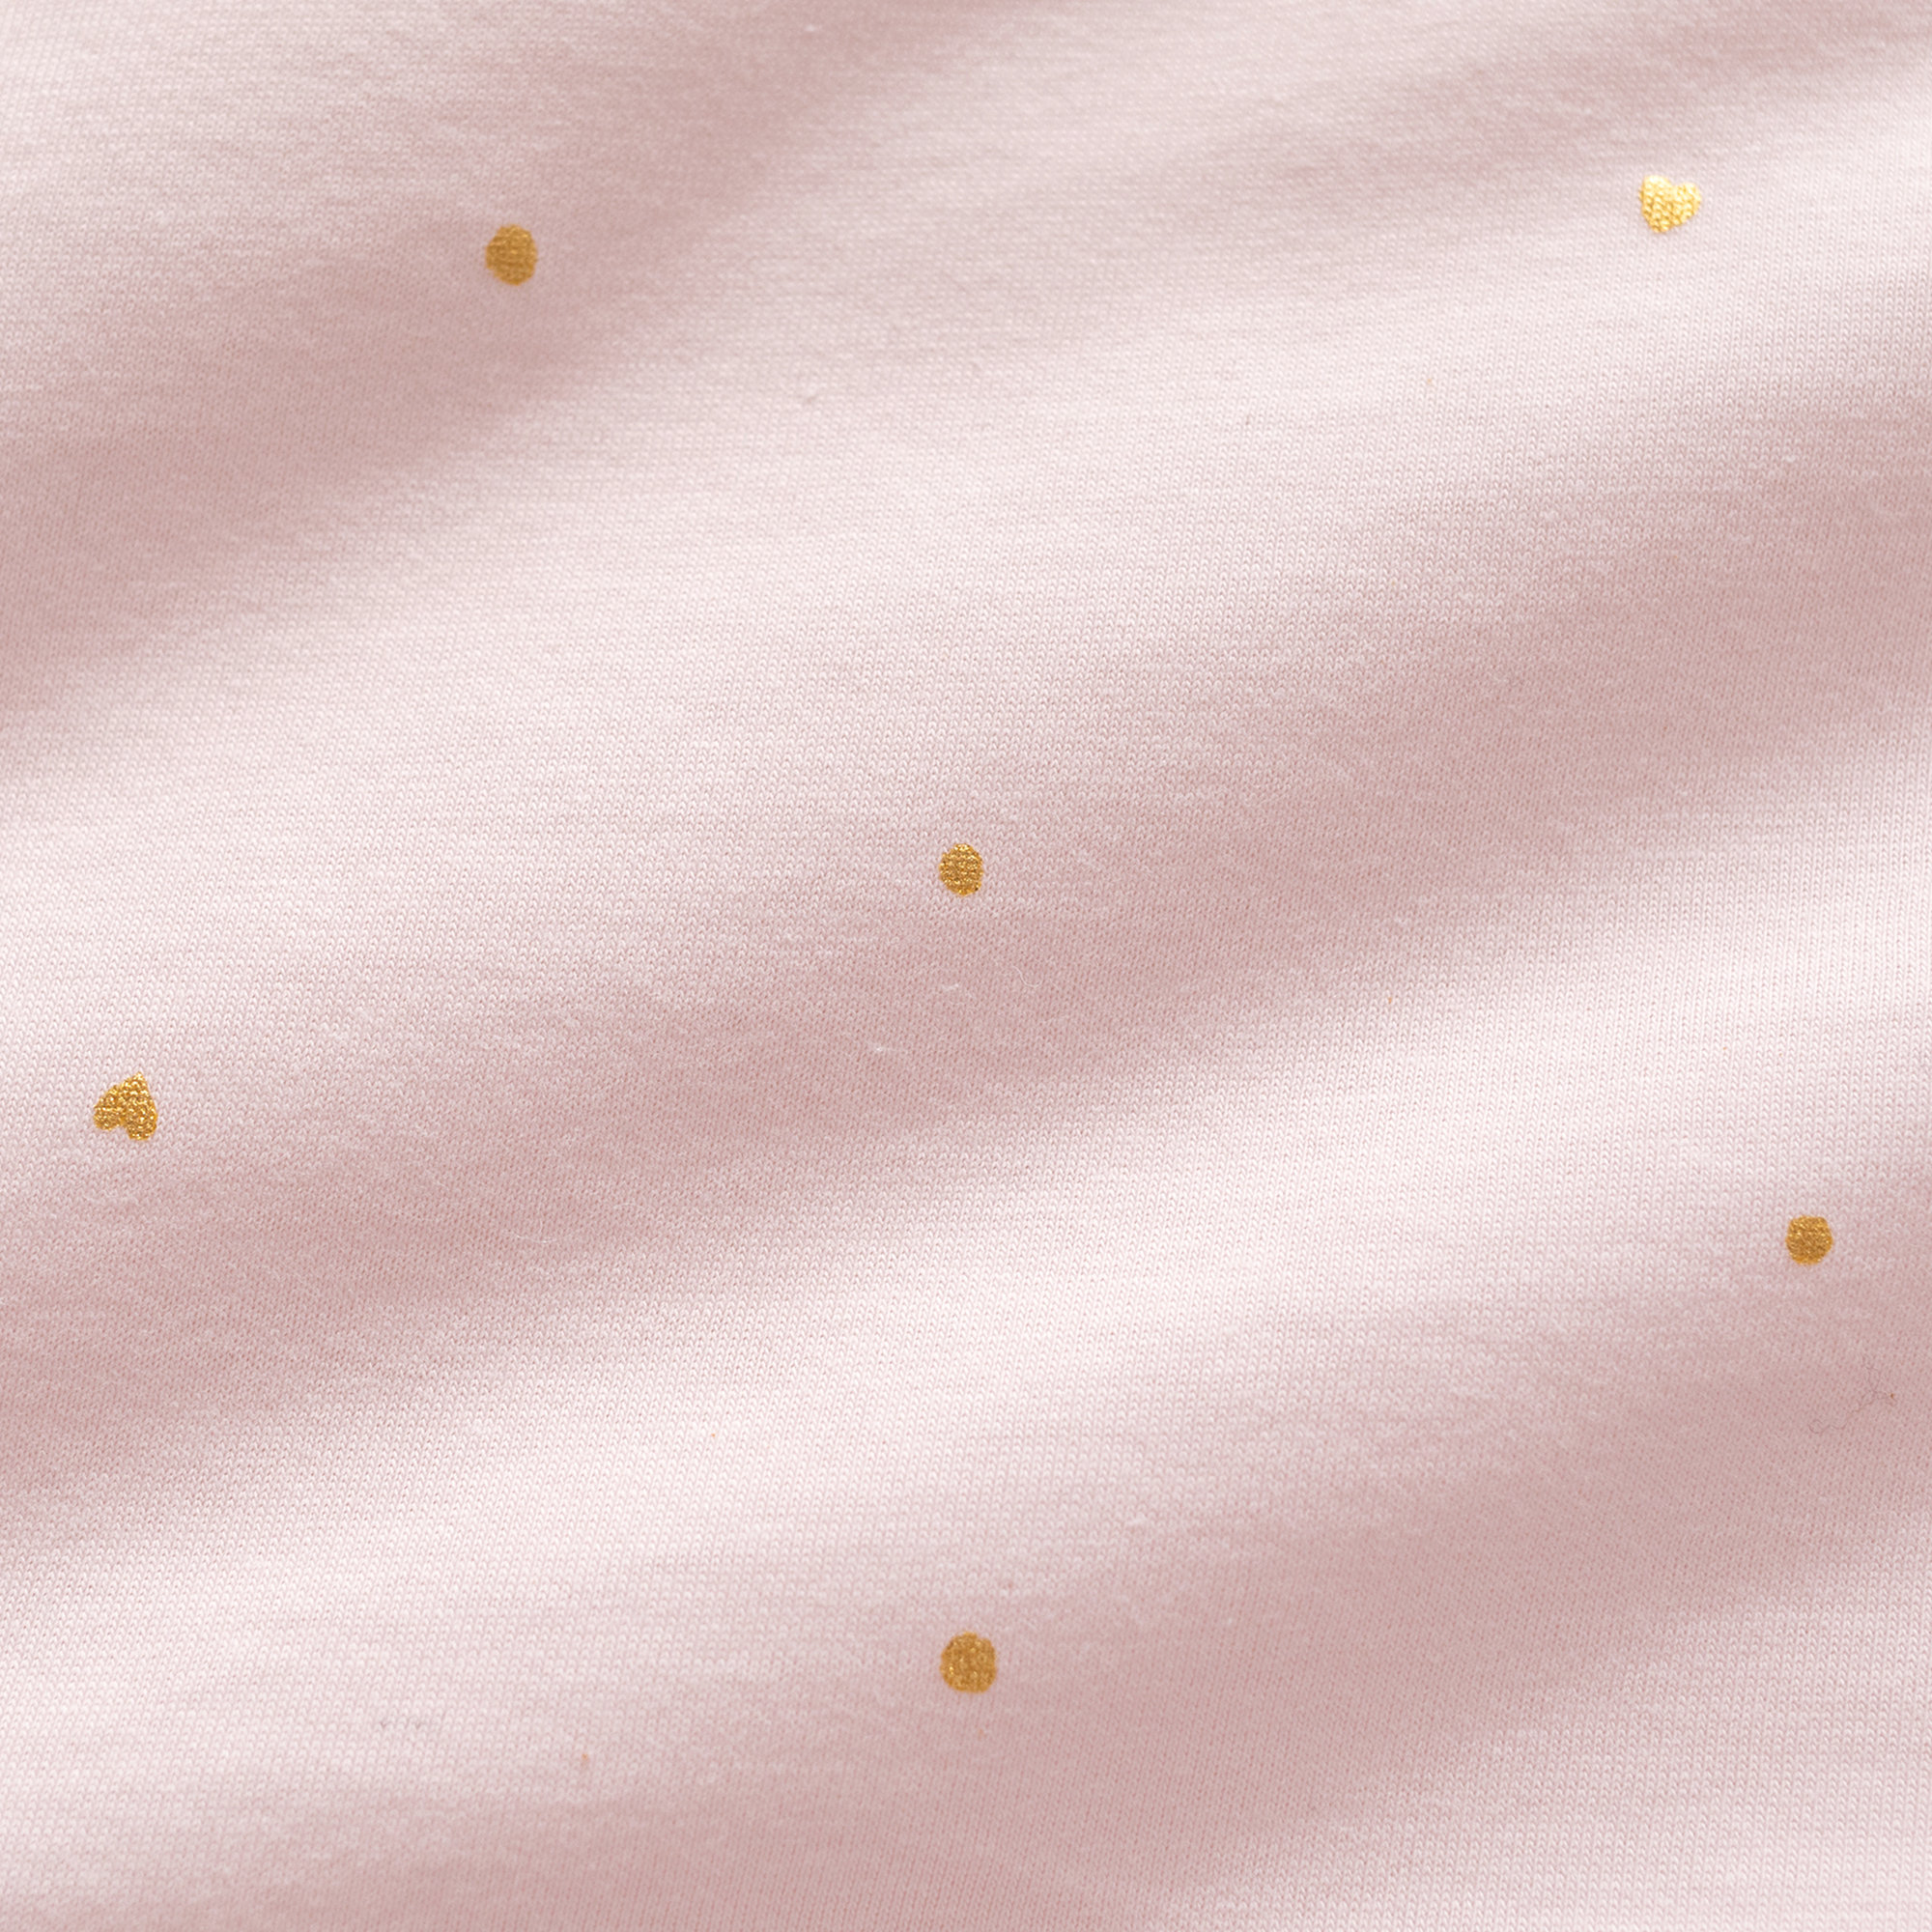 Padded play mat Pady jersey + jersey 75x95cm PRETY Gold dots print[AWARENESS]